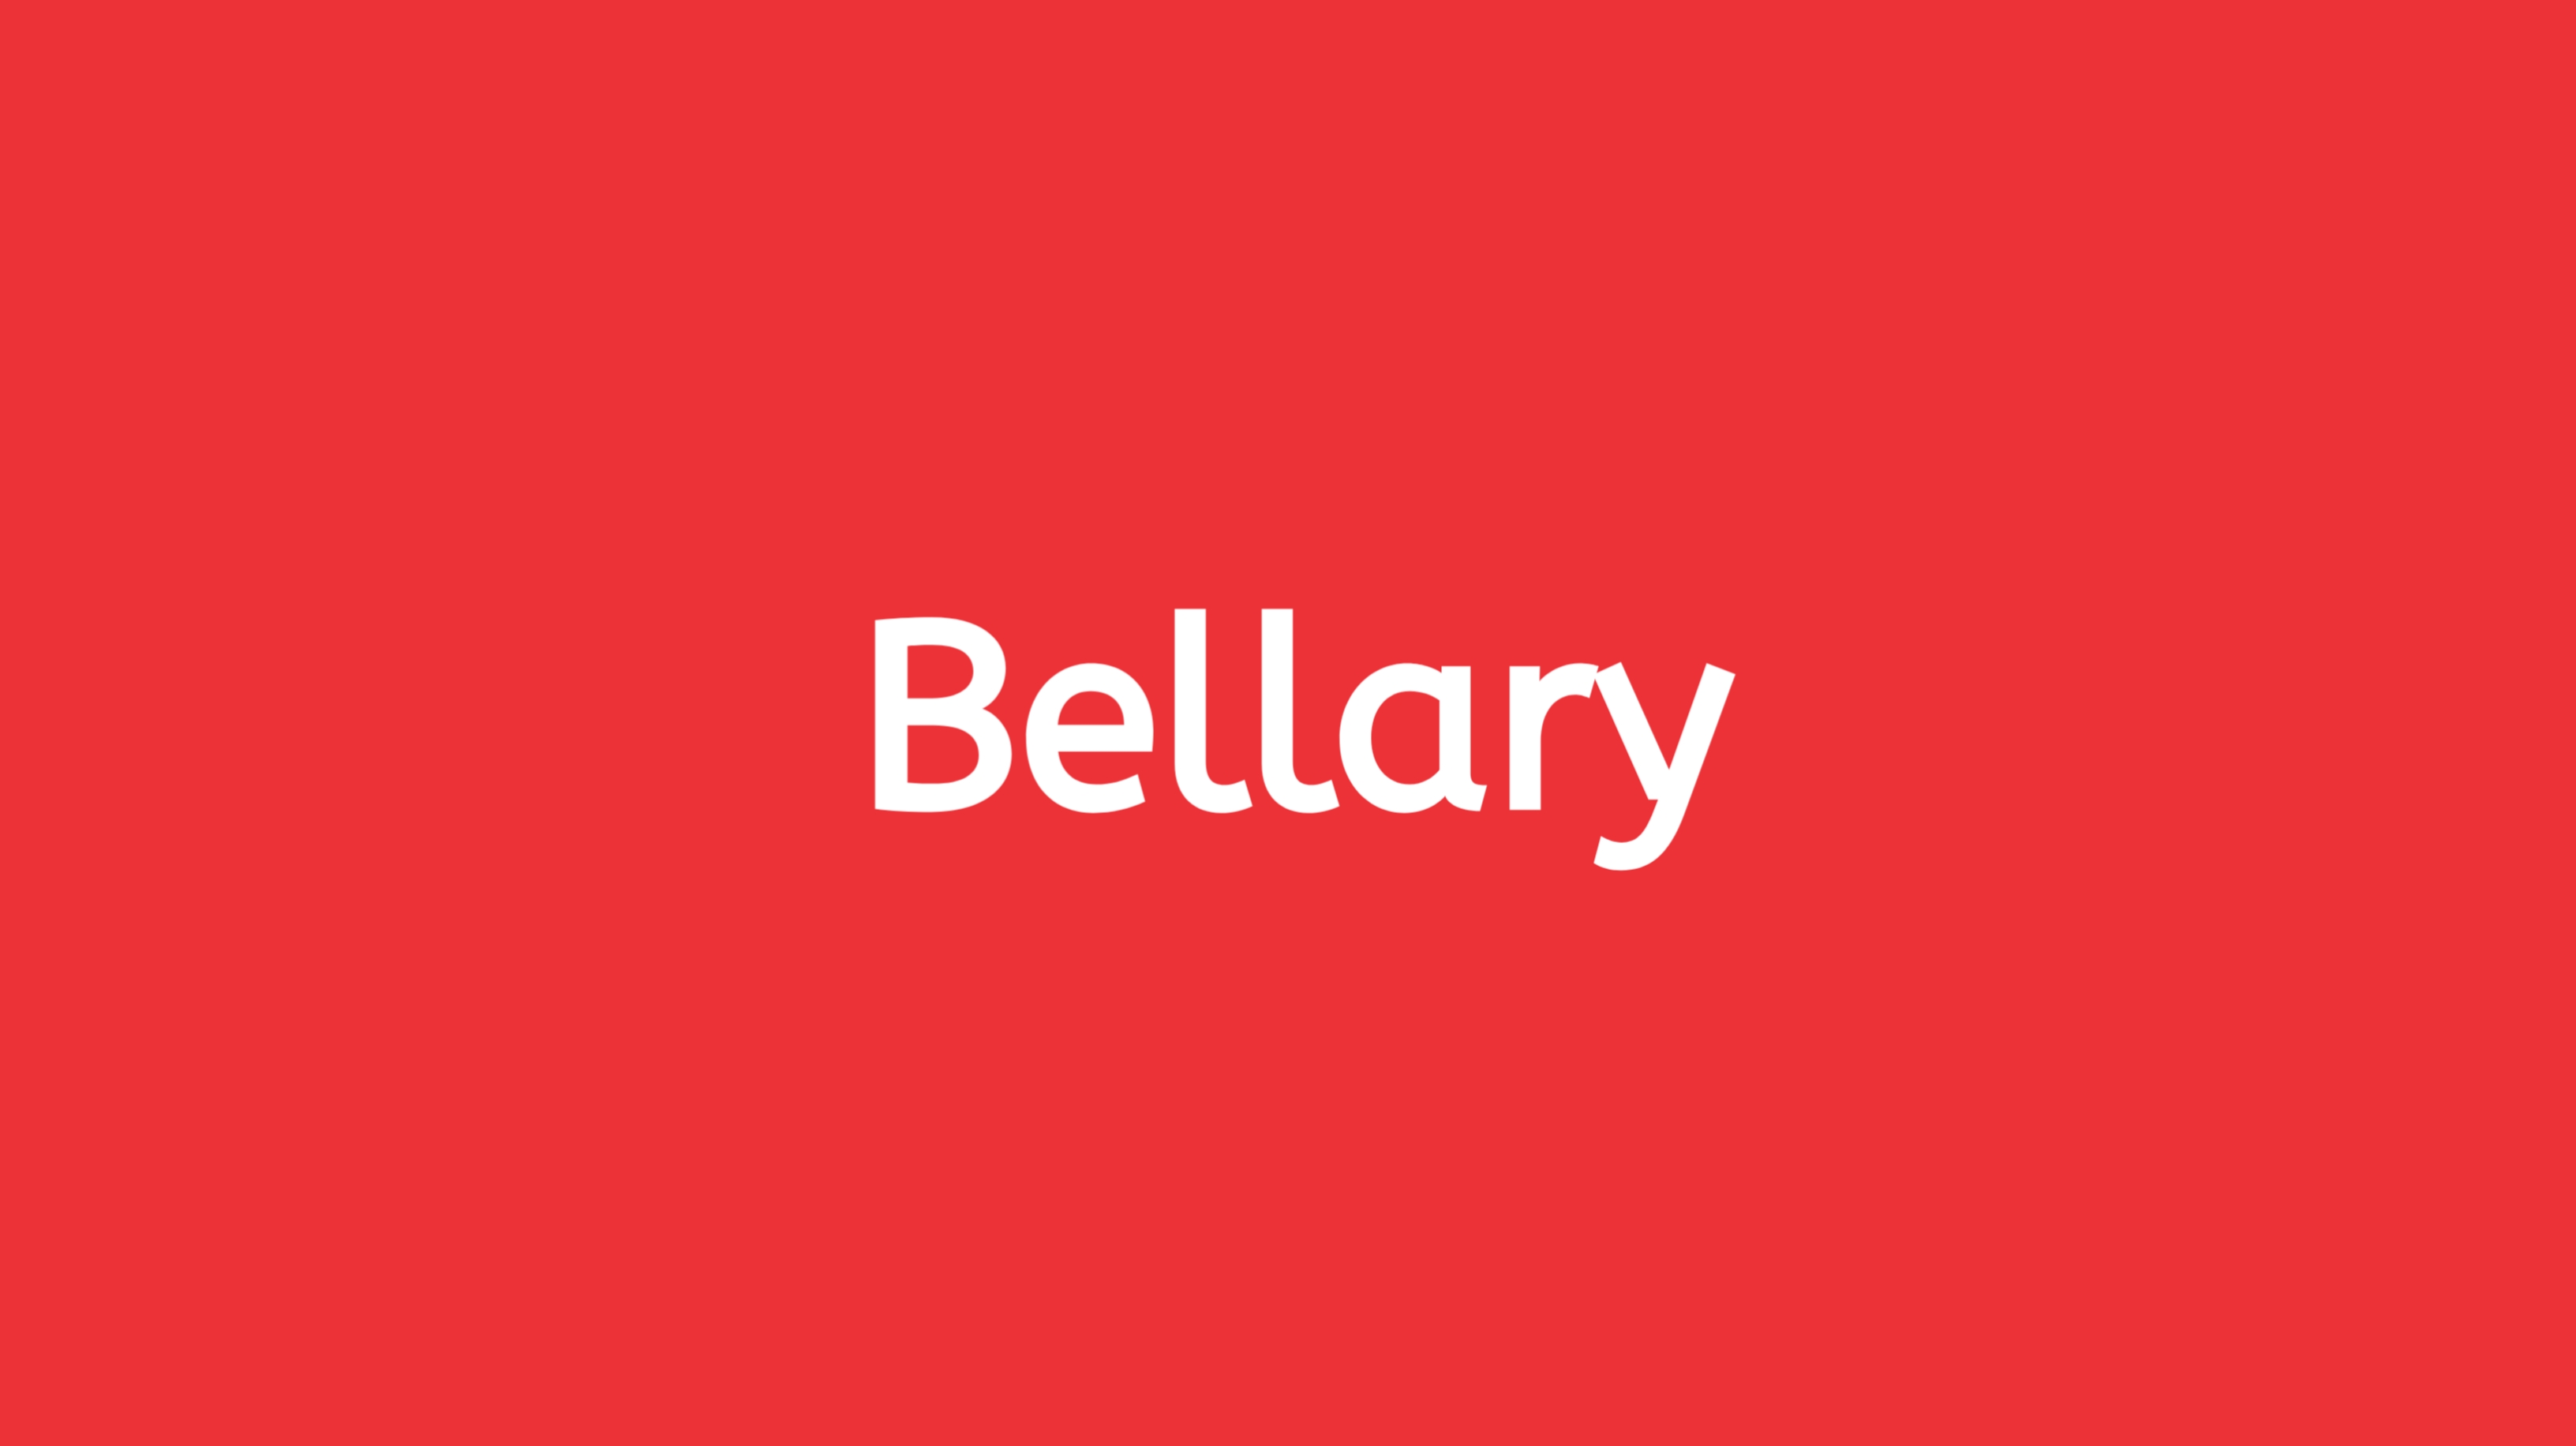 StayFit - Bellary